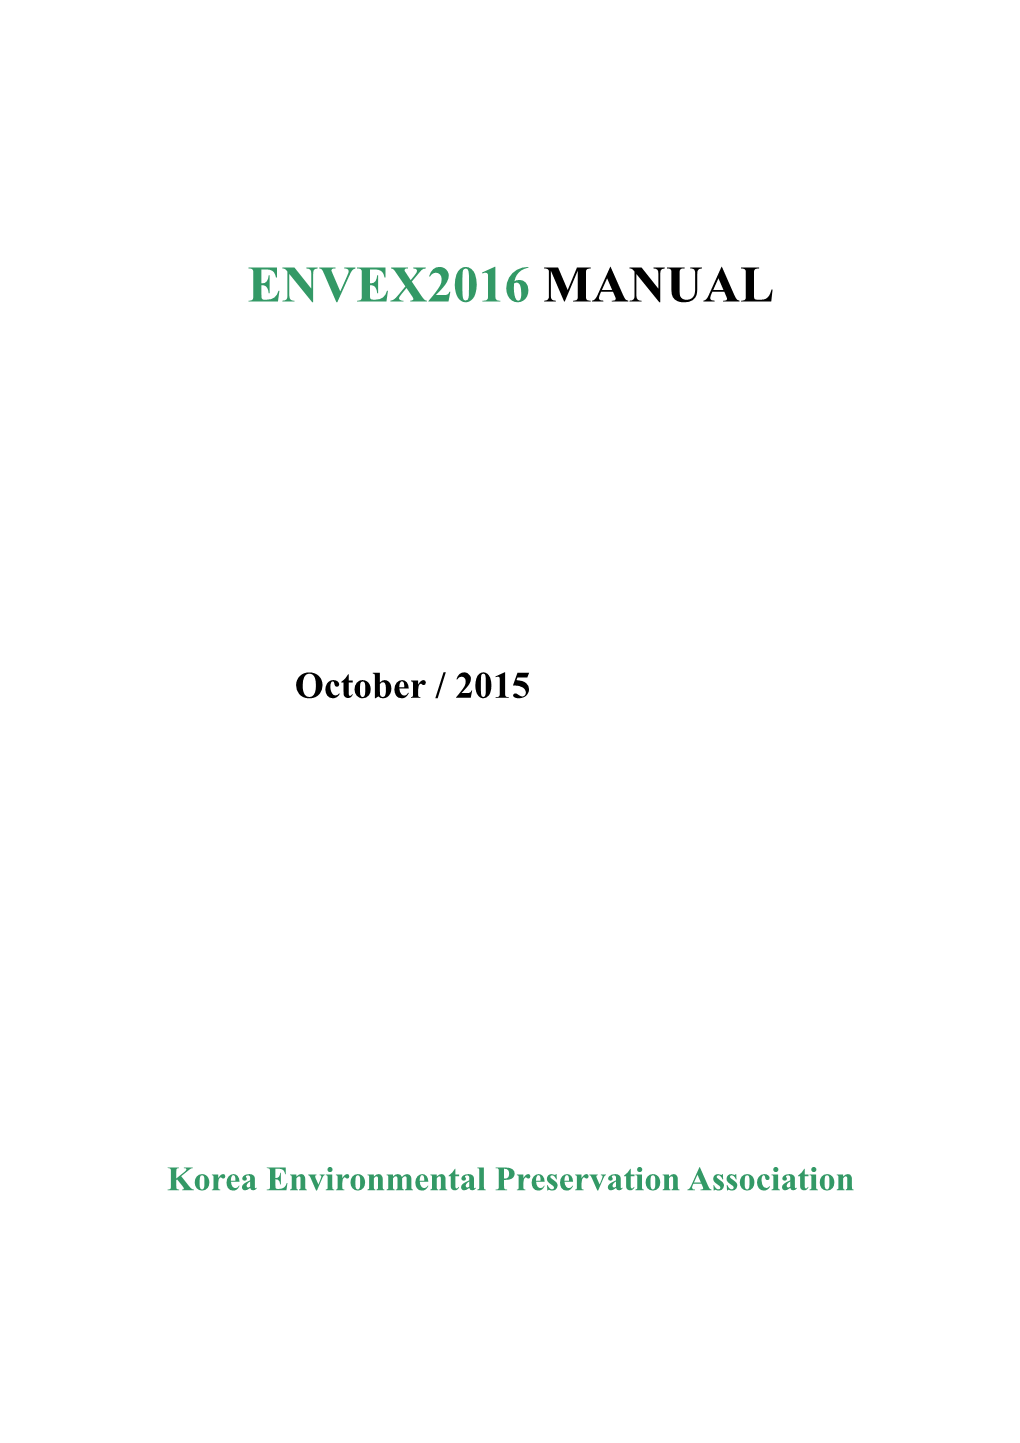 Korea Environmental Preservation Association